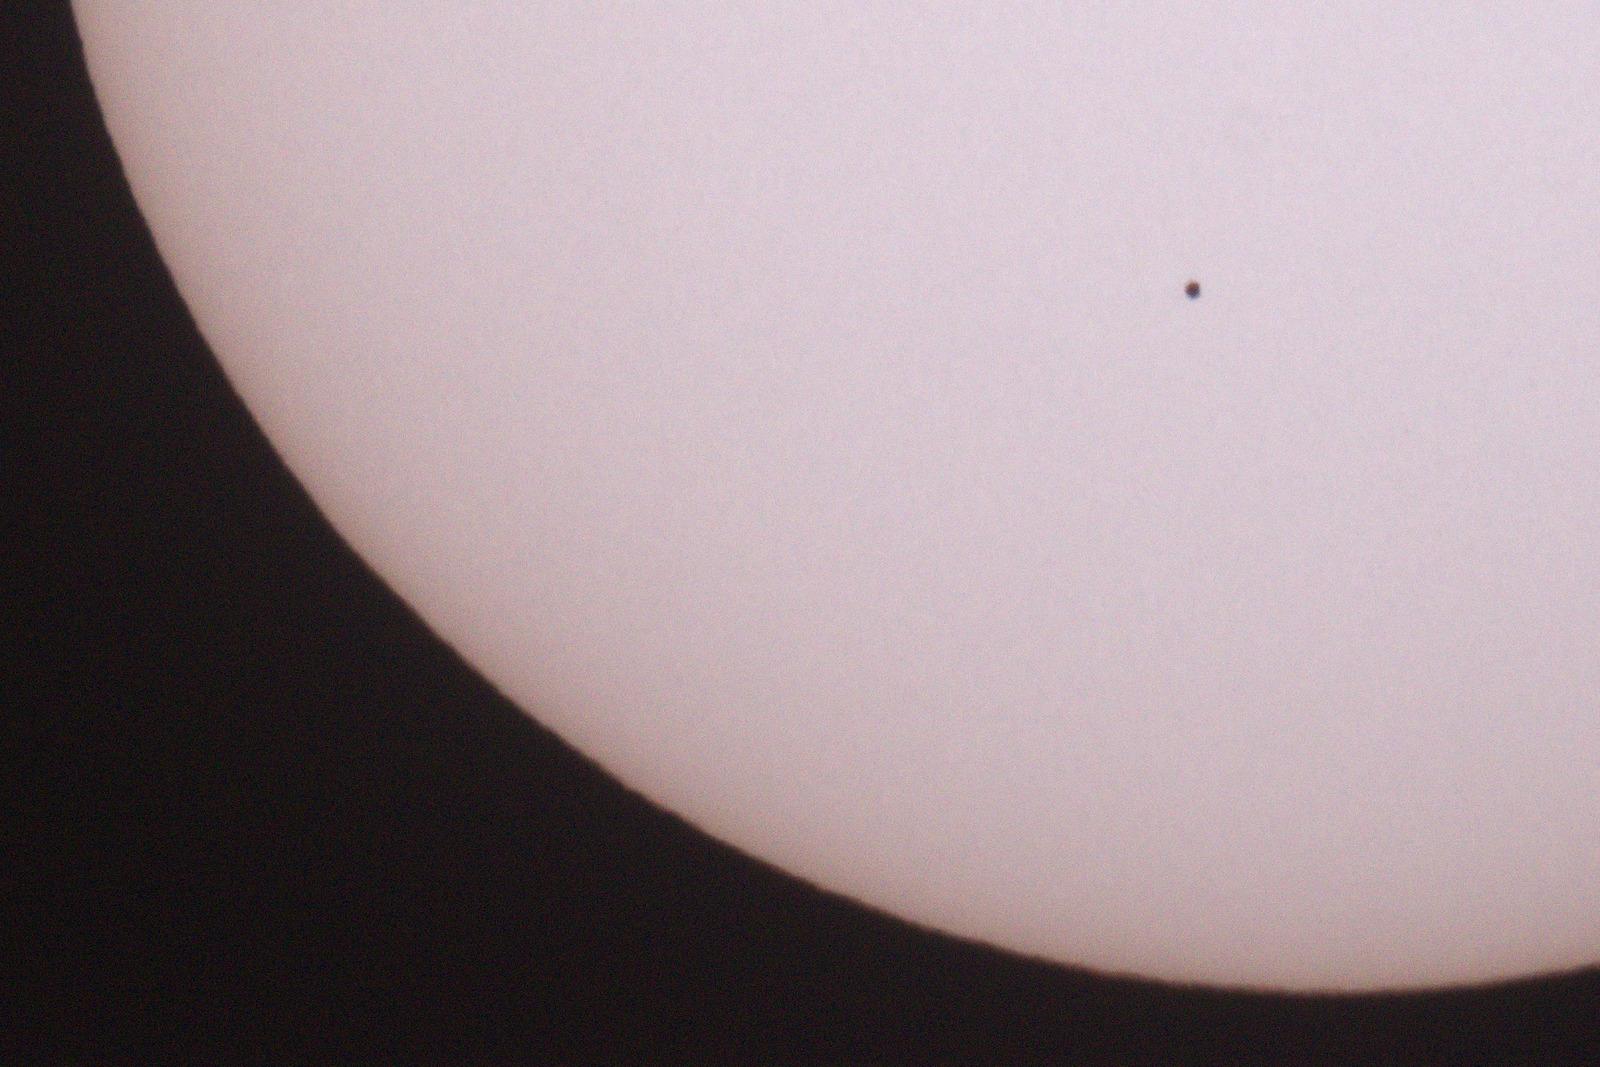 Mercury sun transit May 2016